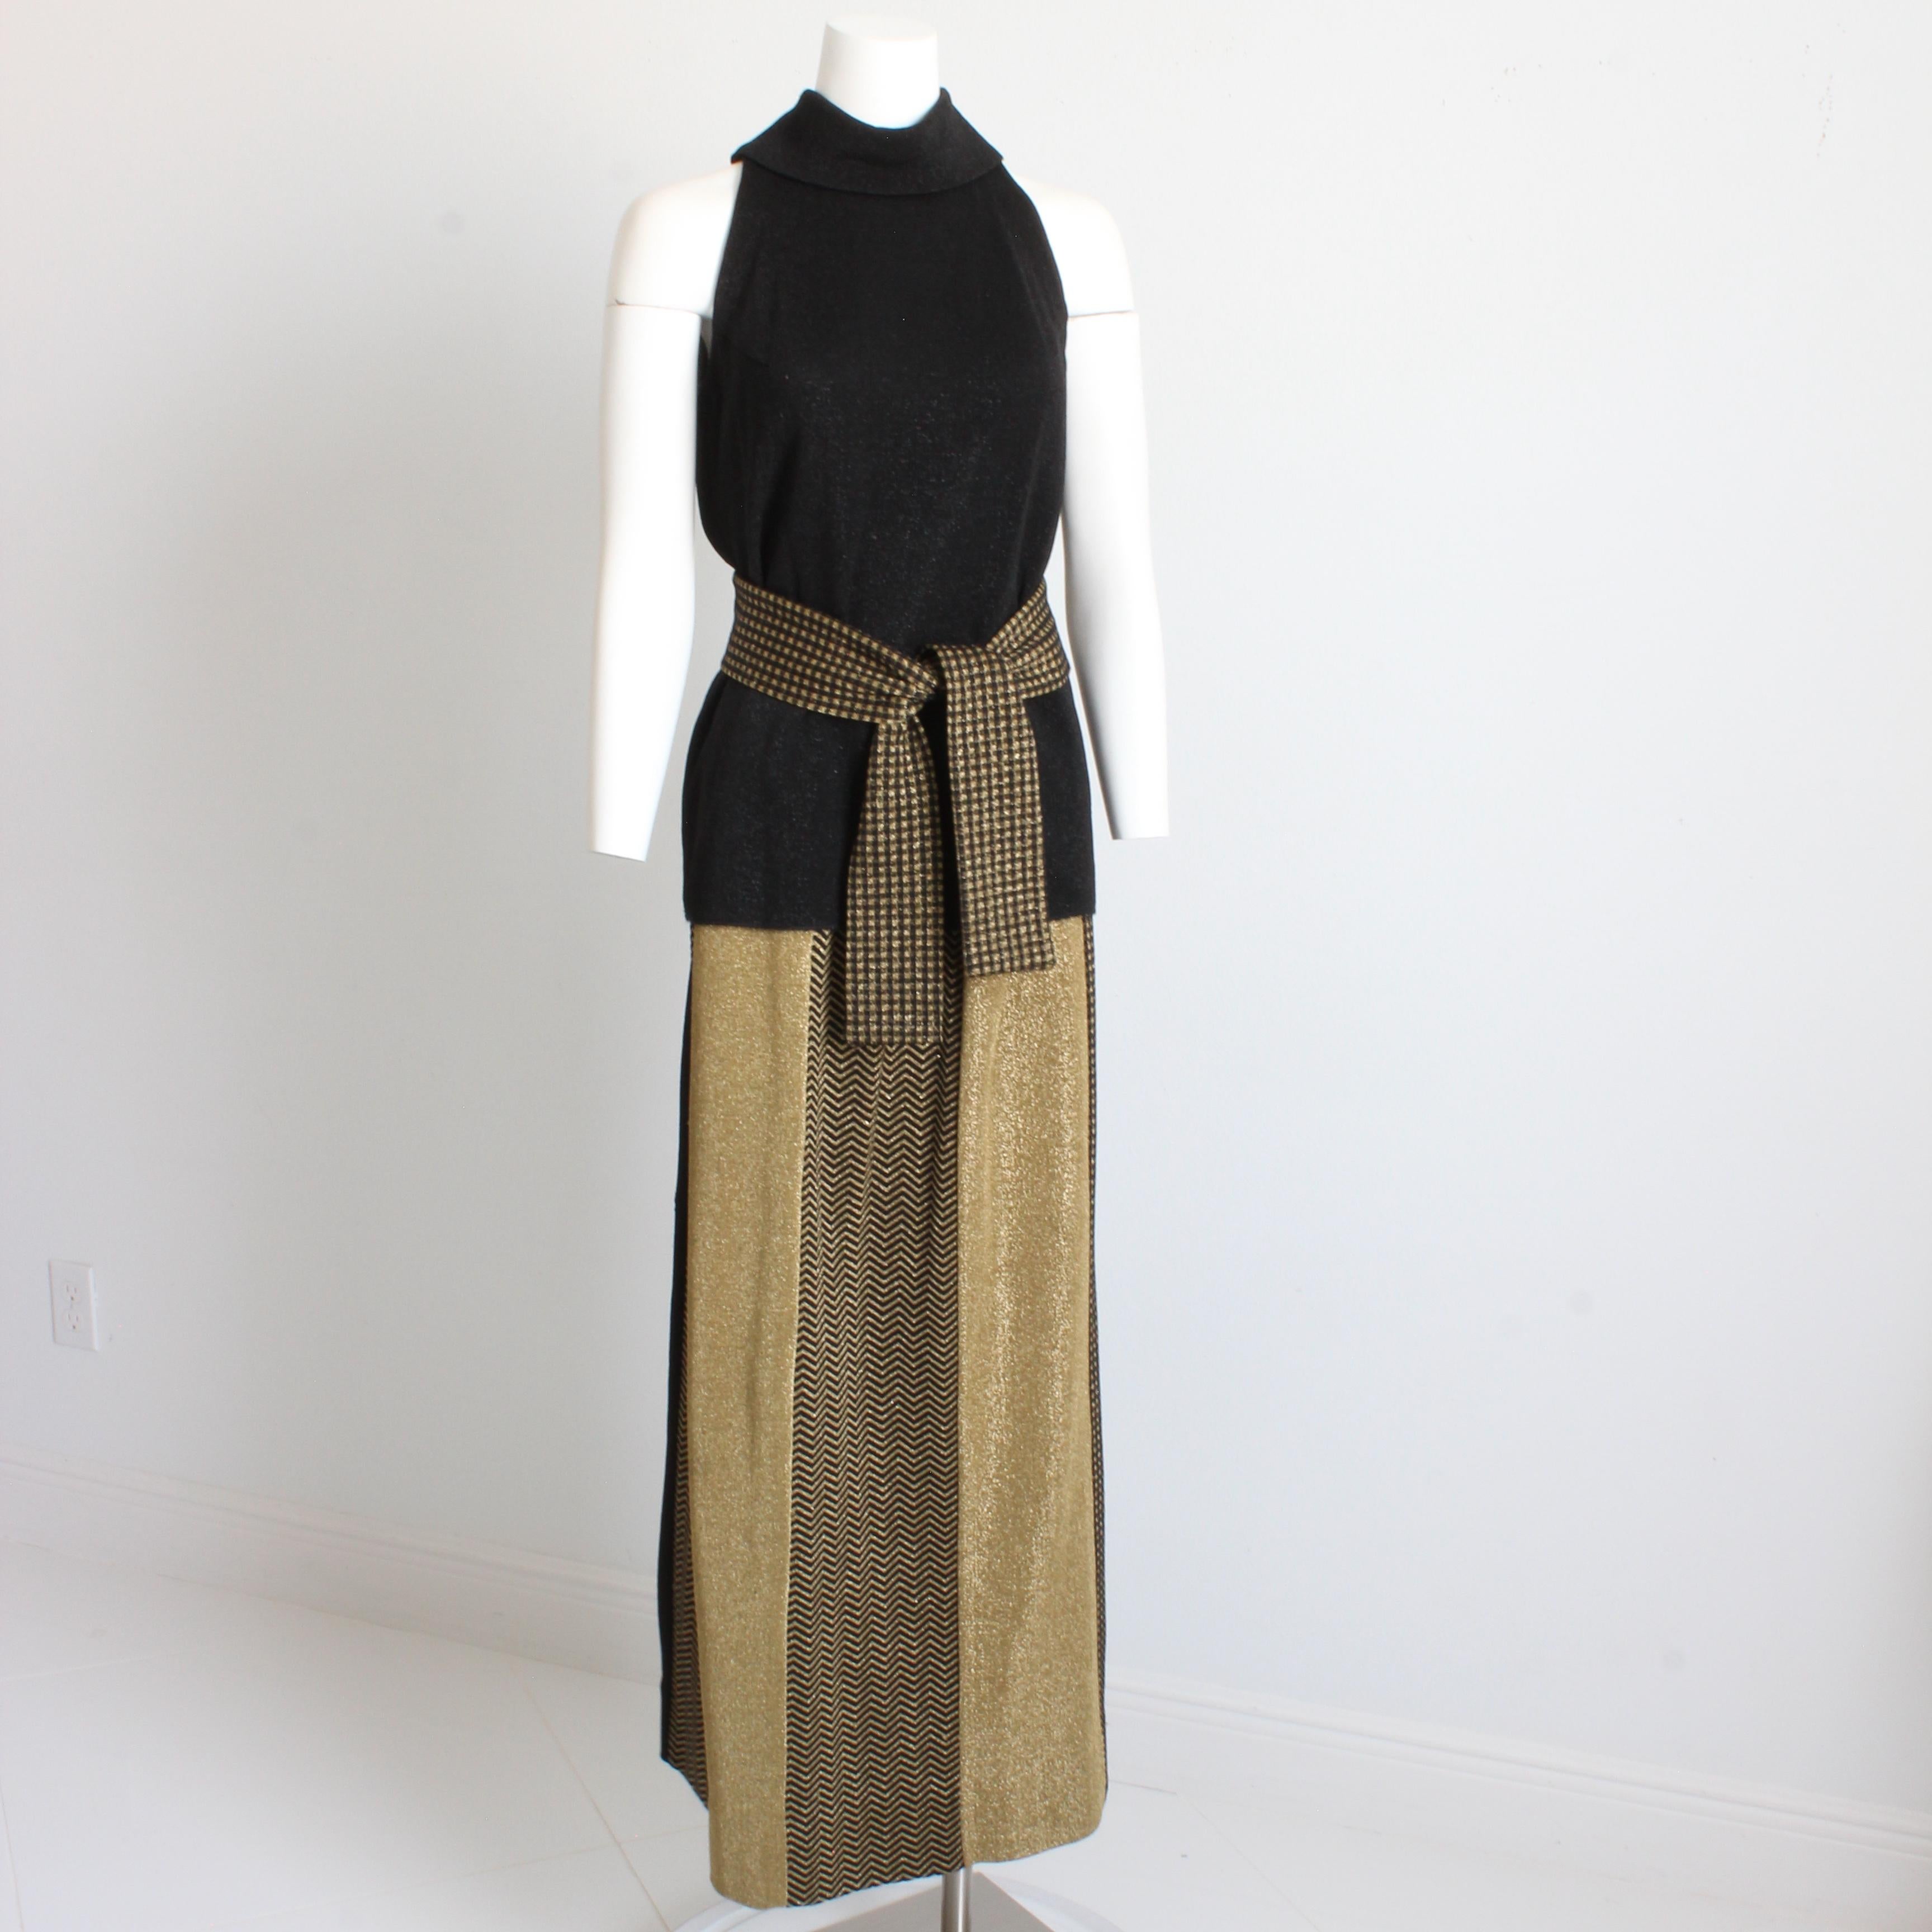 Women's or Men's Rudi Gernreich 3pc Set Top Skirt and Sash Belt Black Gold Metallic Knit Suit 70s For Sale